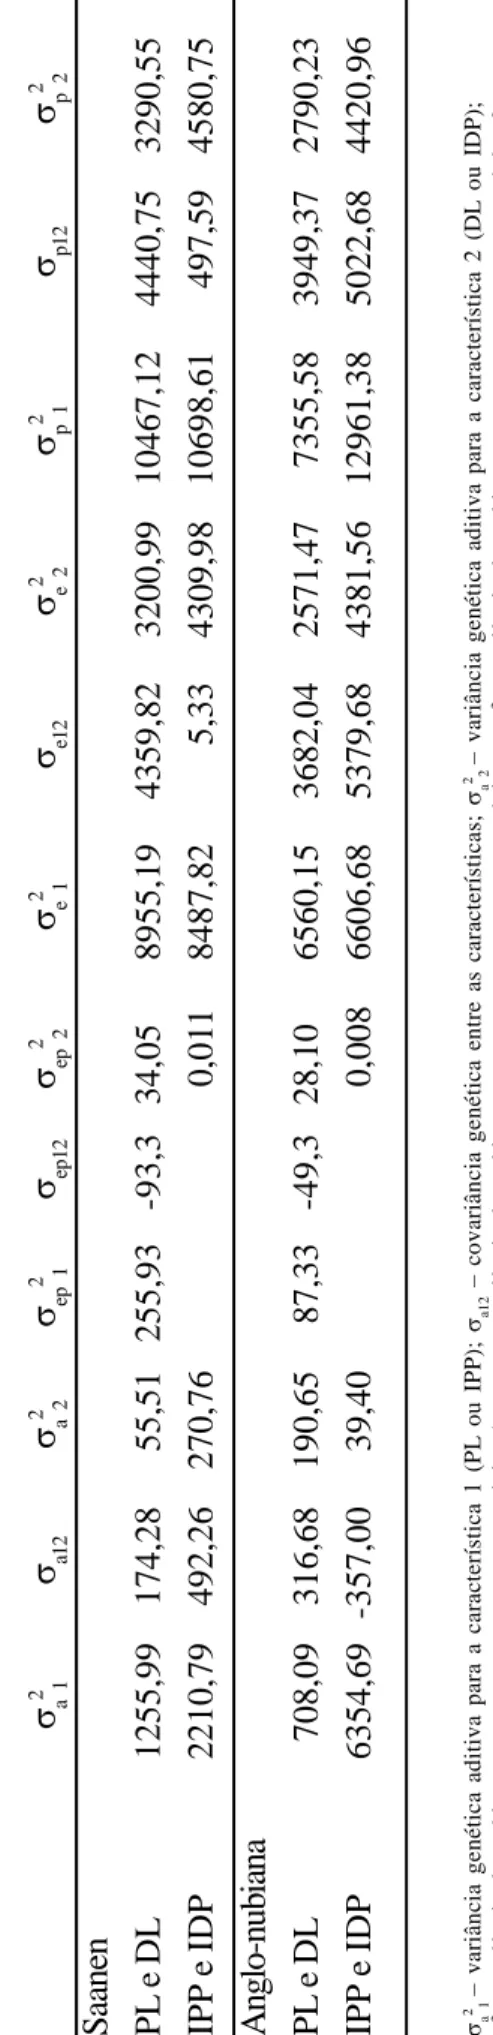 Tabela 2Componentes de (co)variância1para características2de interesse econômico nas raças Saanen e Anglo-nubiana